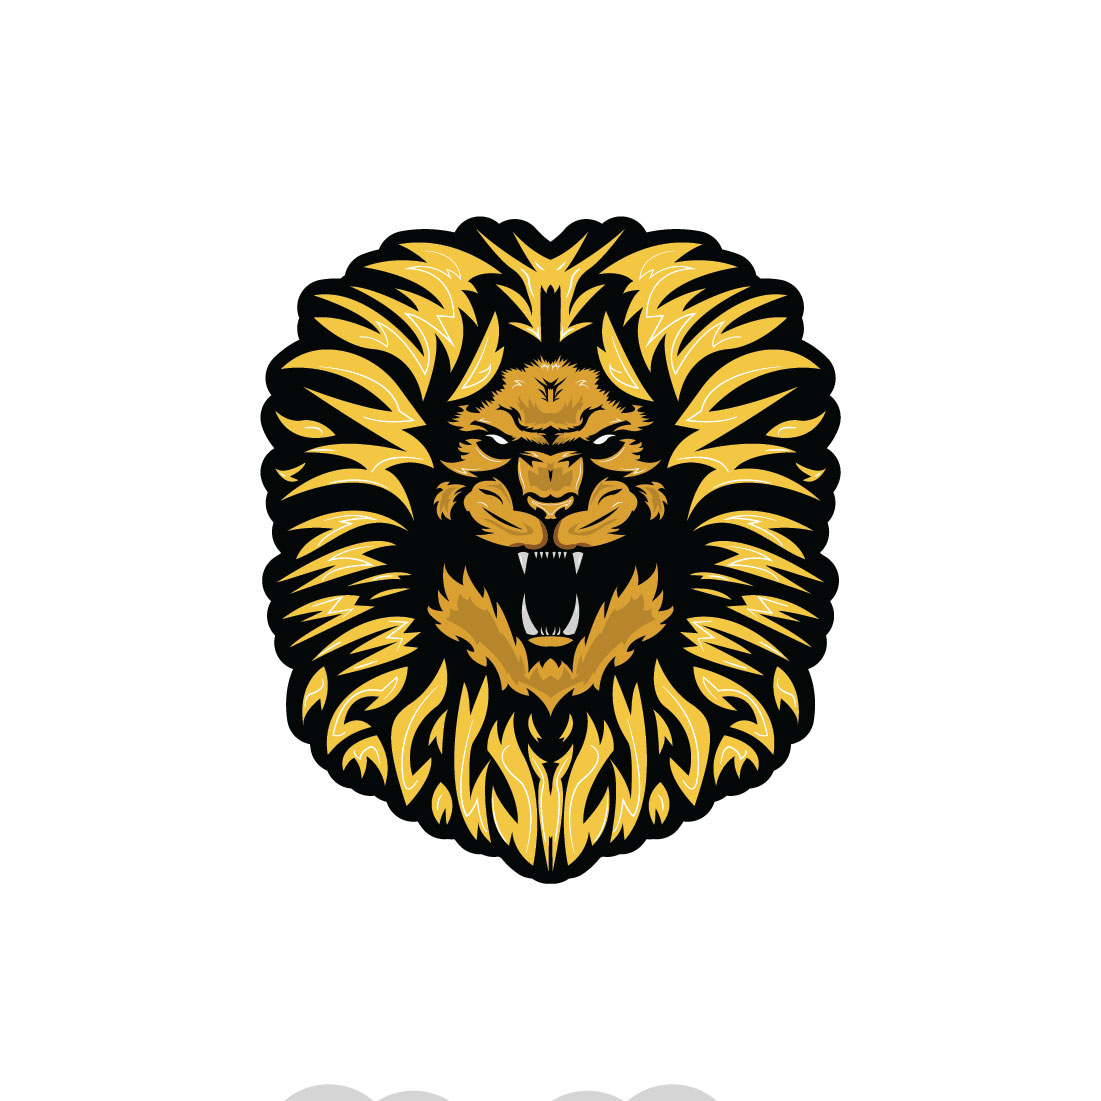 Lion Illustrator Logo cover image.